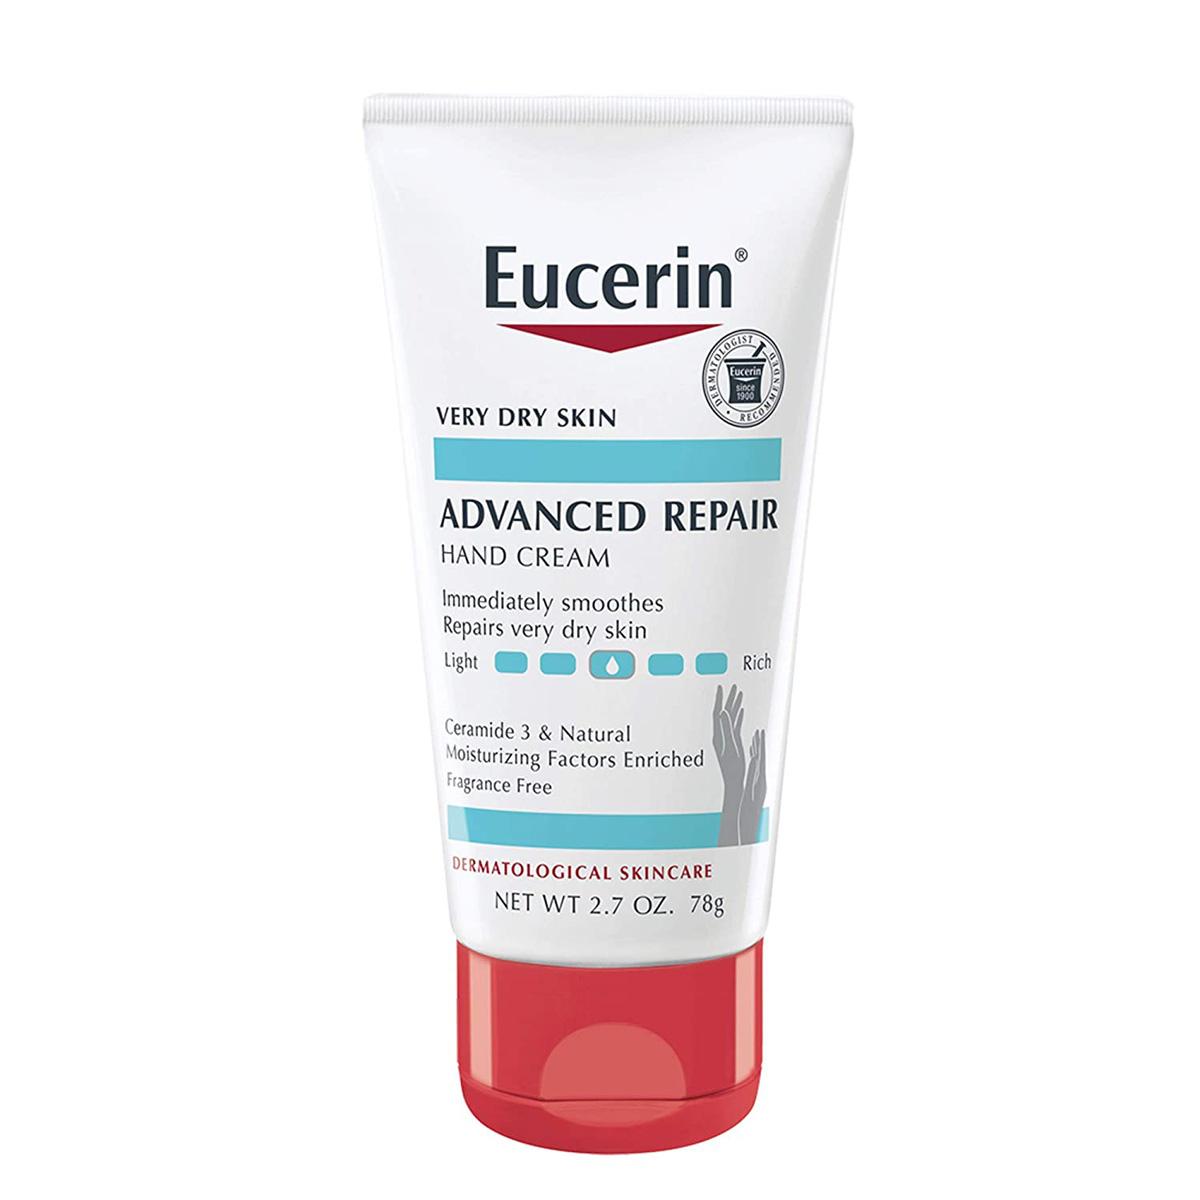 3 Eucerin Advanced Repair Hand Cream for $7.71 Shipped